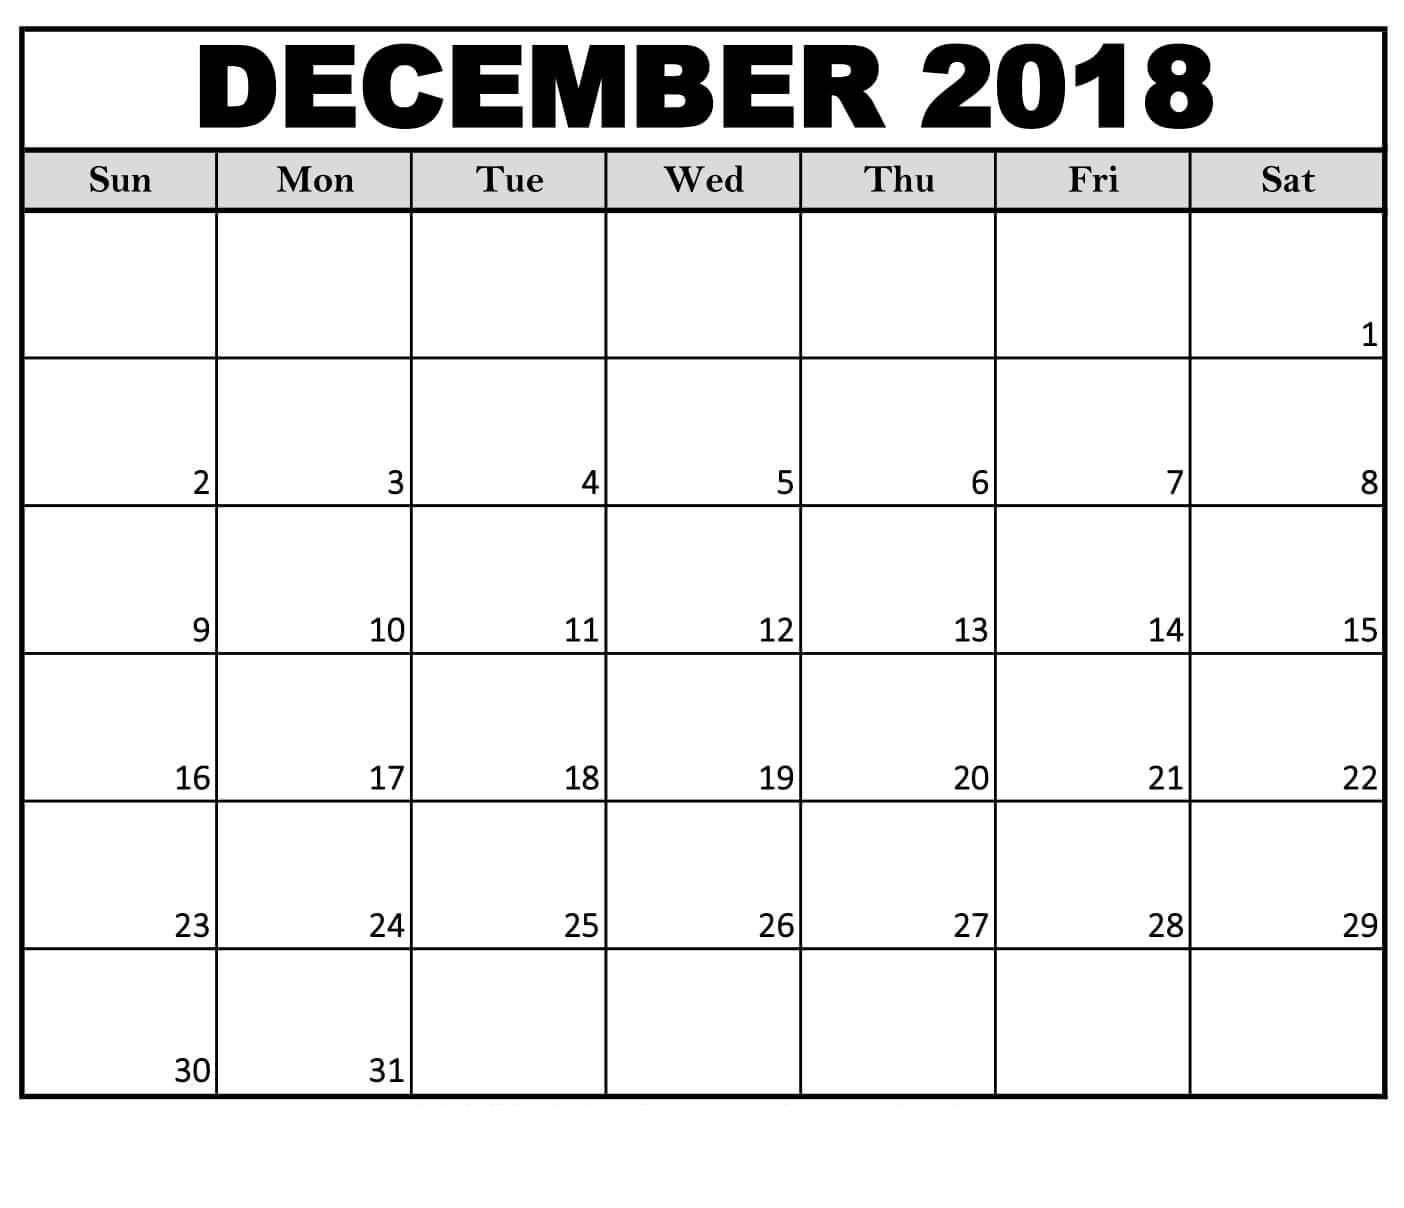 free-calendar-december-2018-medical-resume